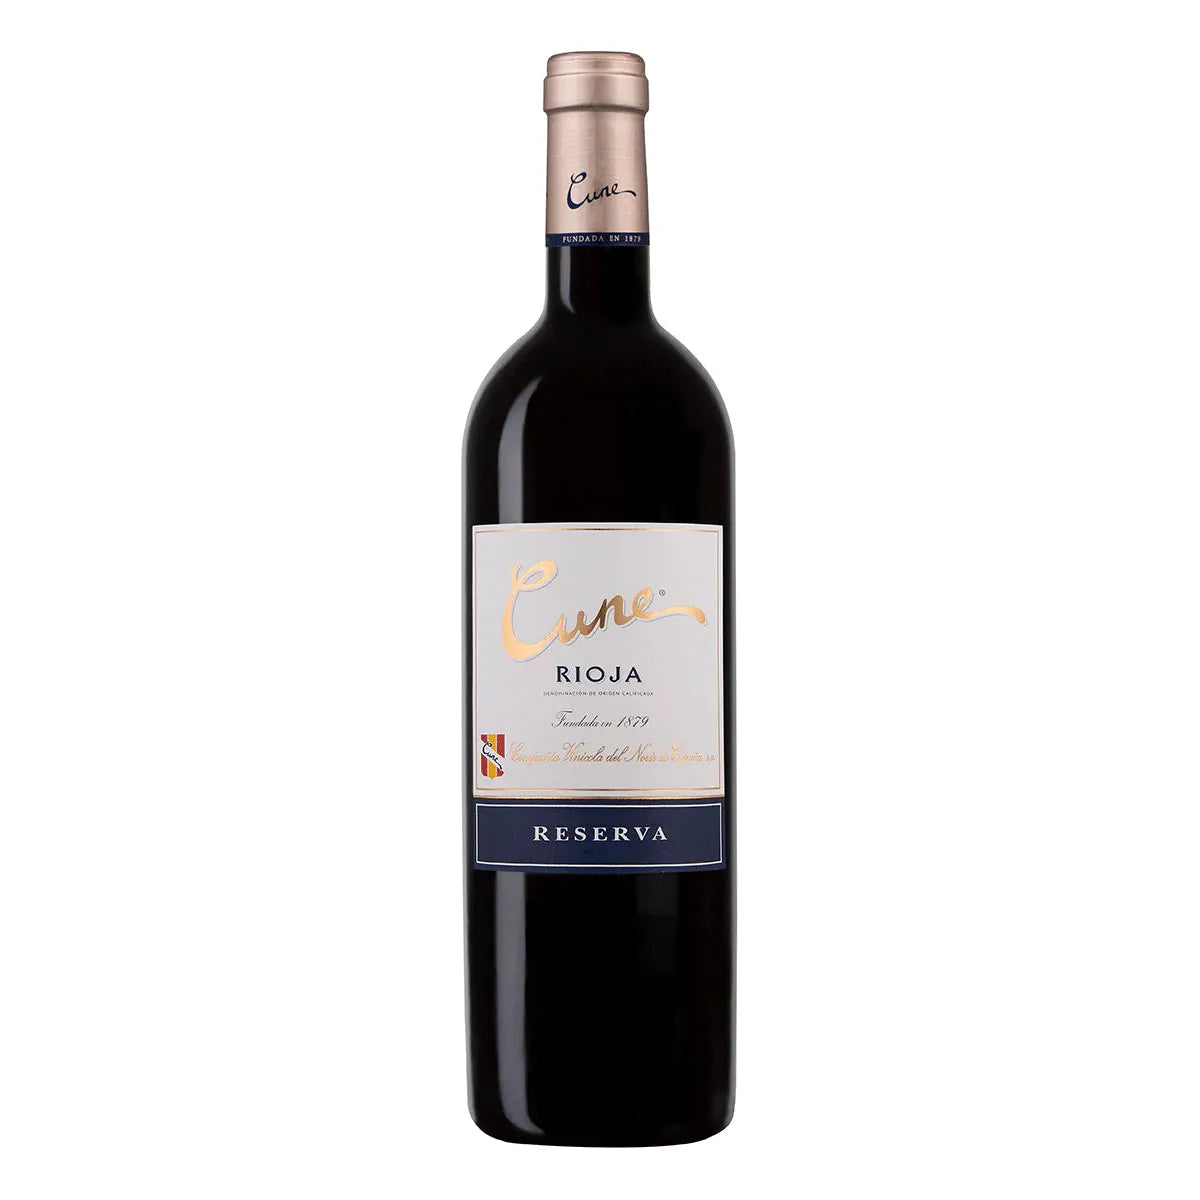 C.V.N.E aka Cune Reserva Tempranillo Rioja 2018 (6 bottles)